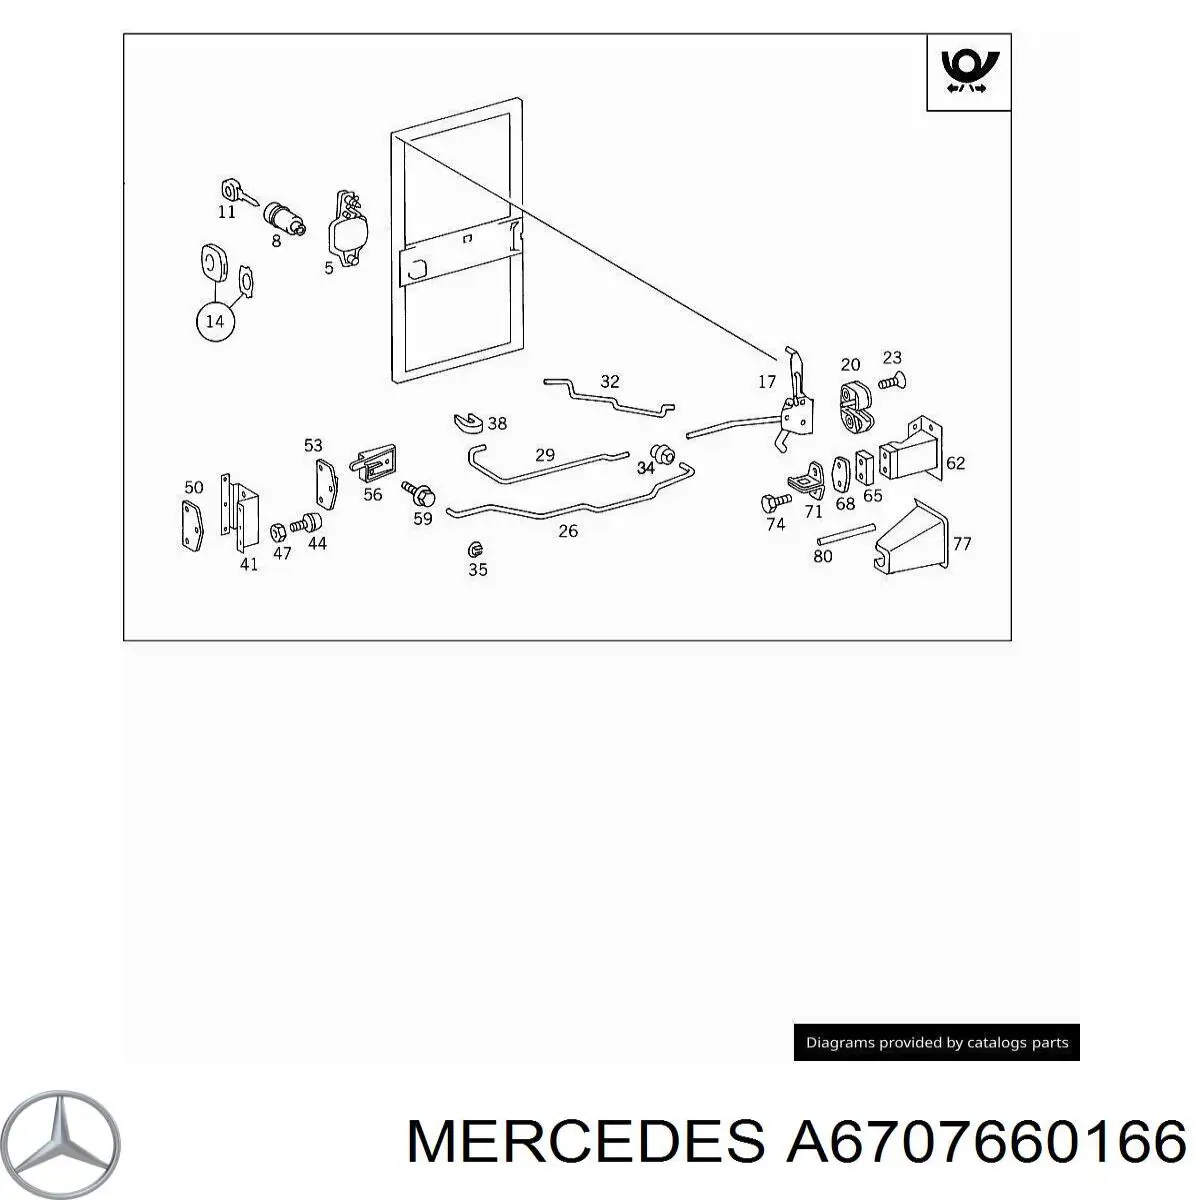 6707660166 Mercedes